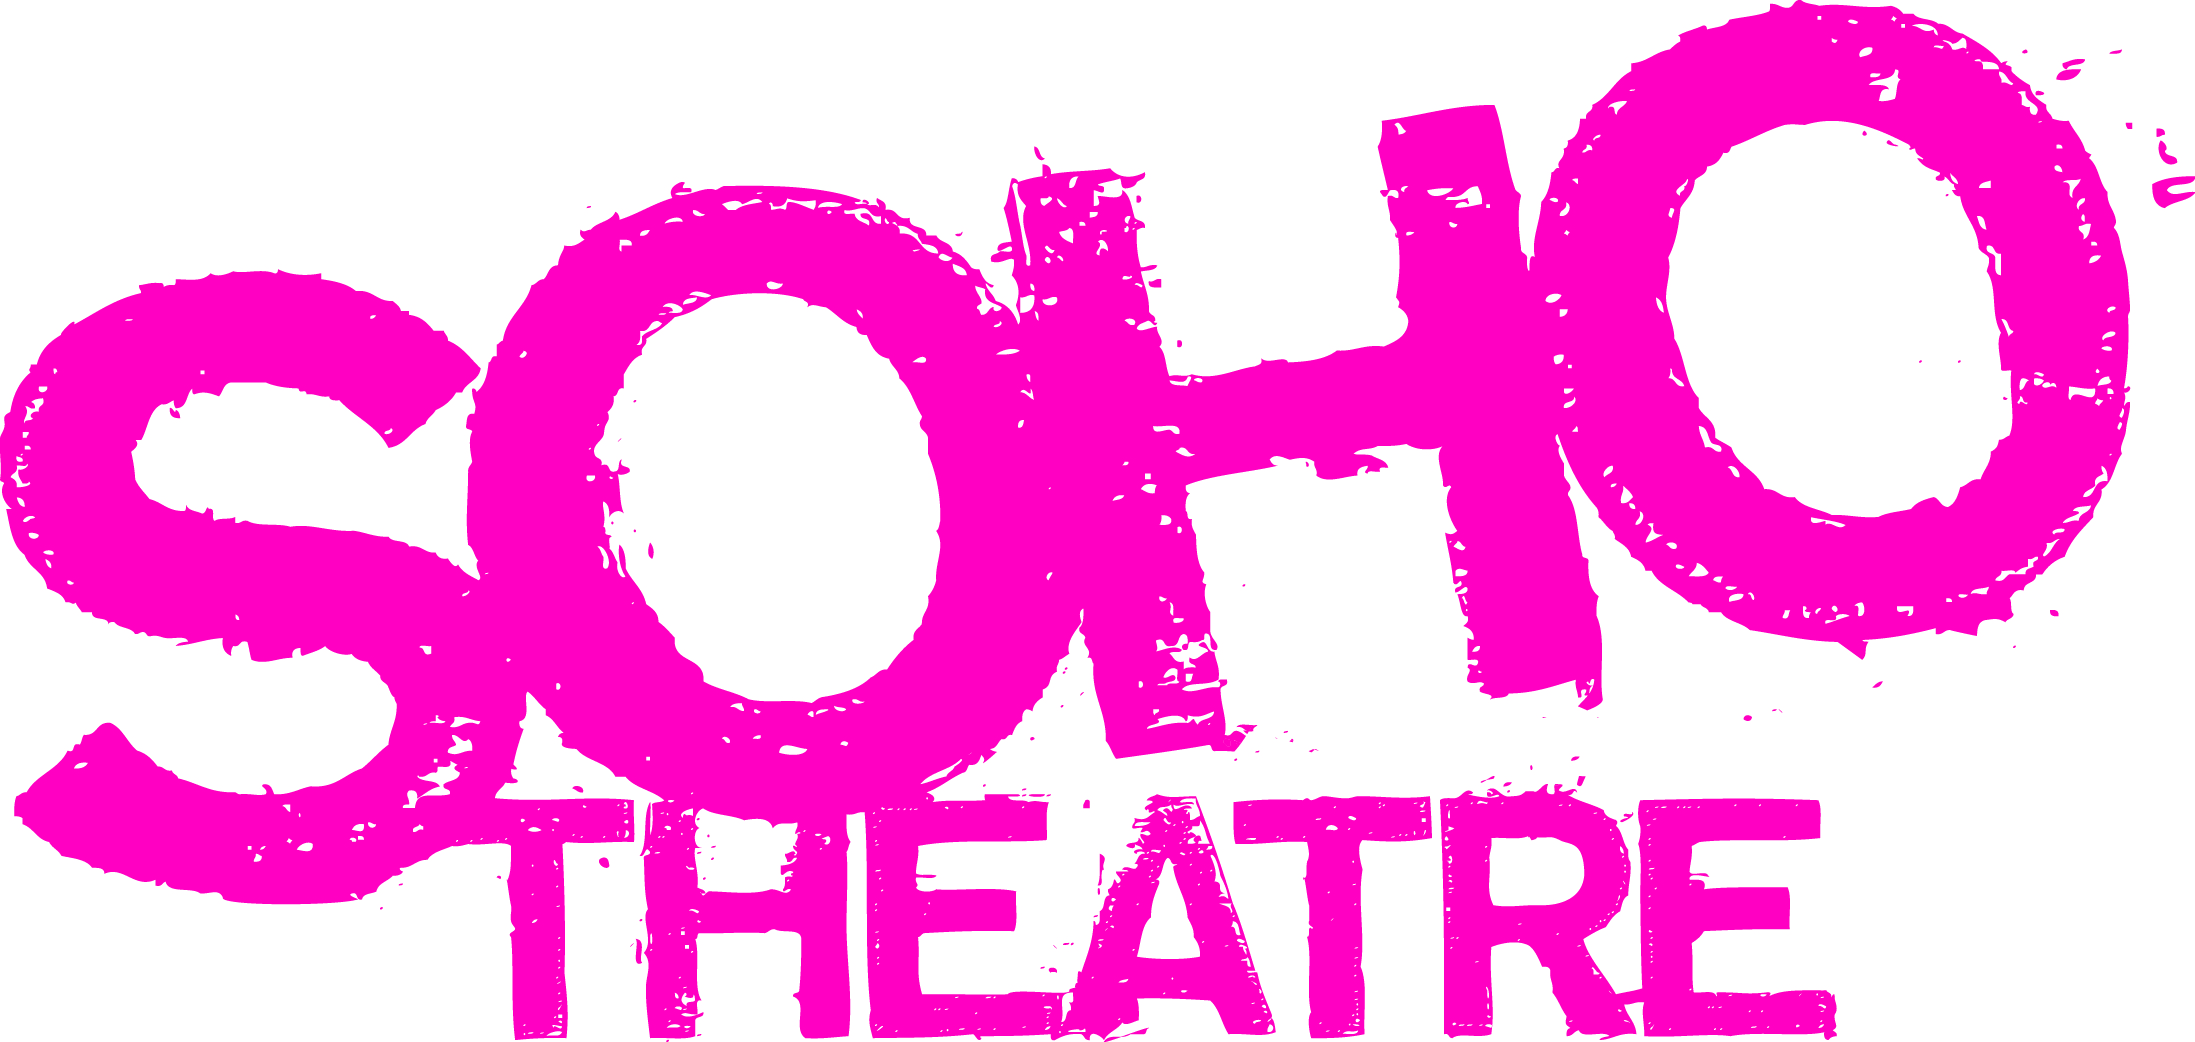 soho theatre logo.jpg